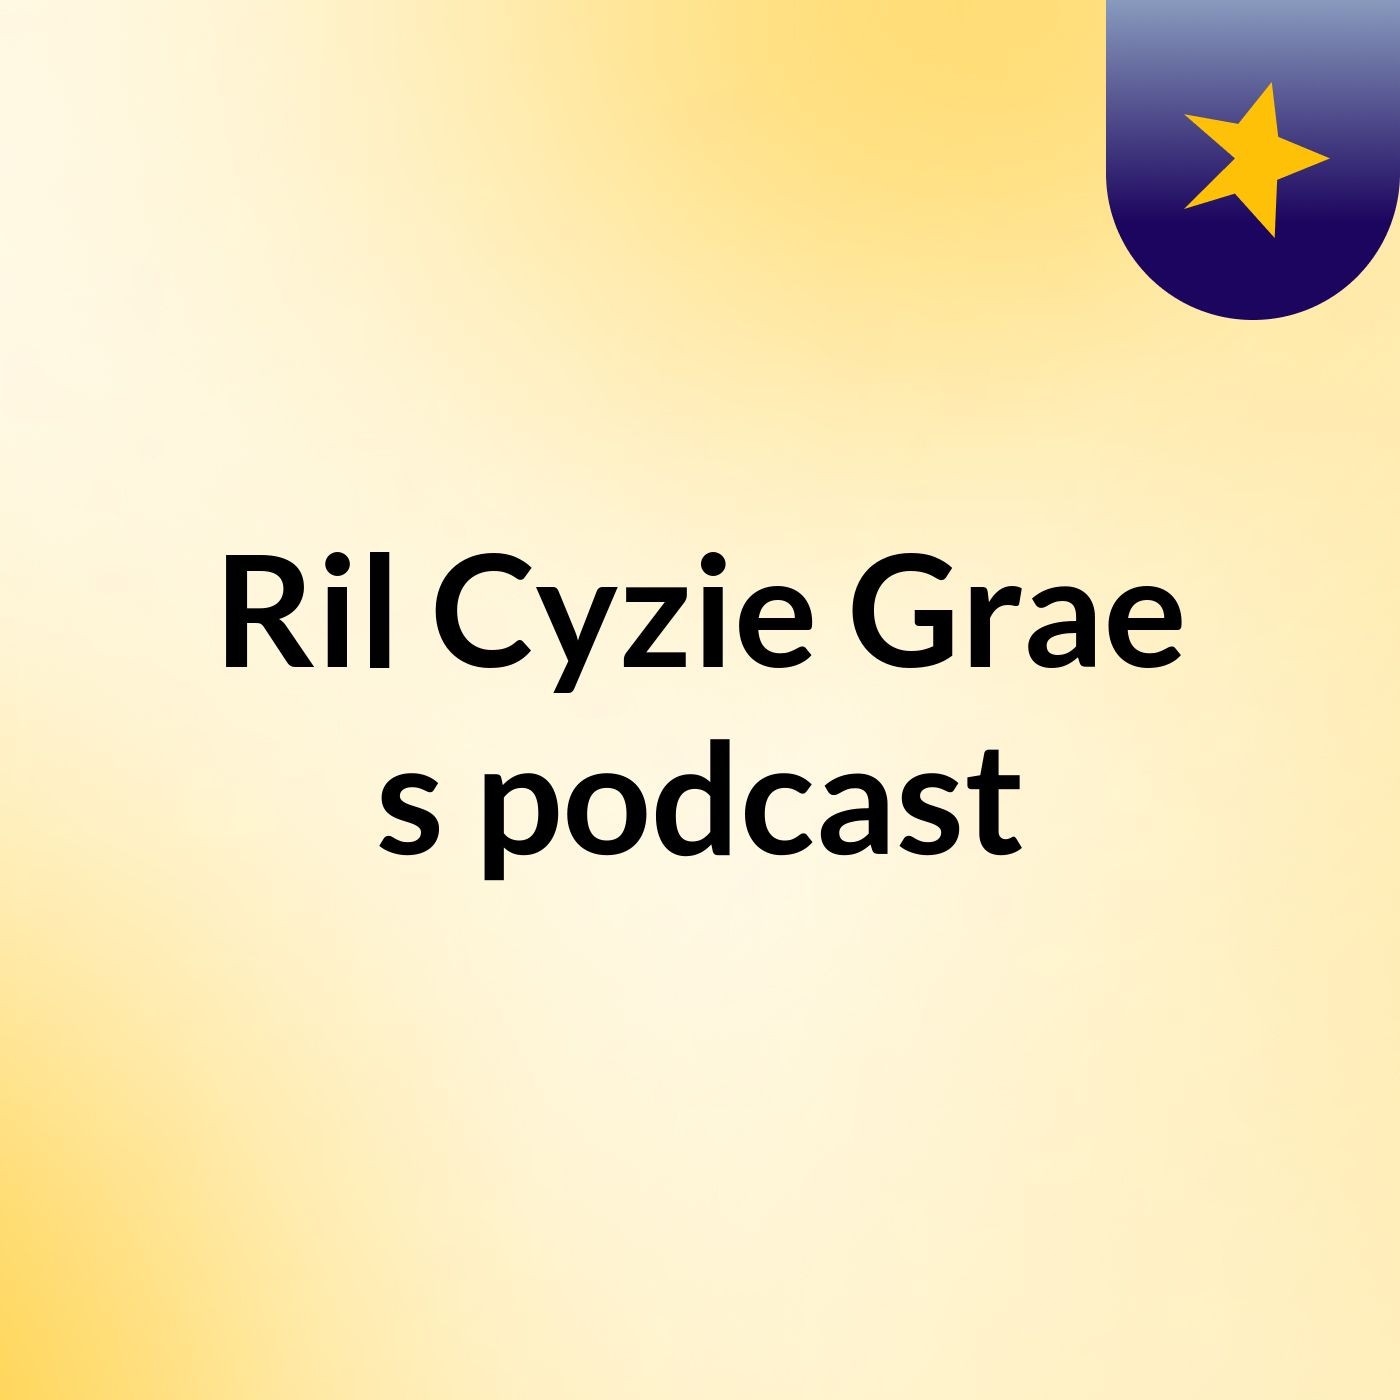 Ril Cyzie Grae's podcast